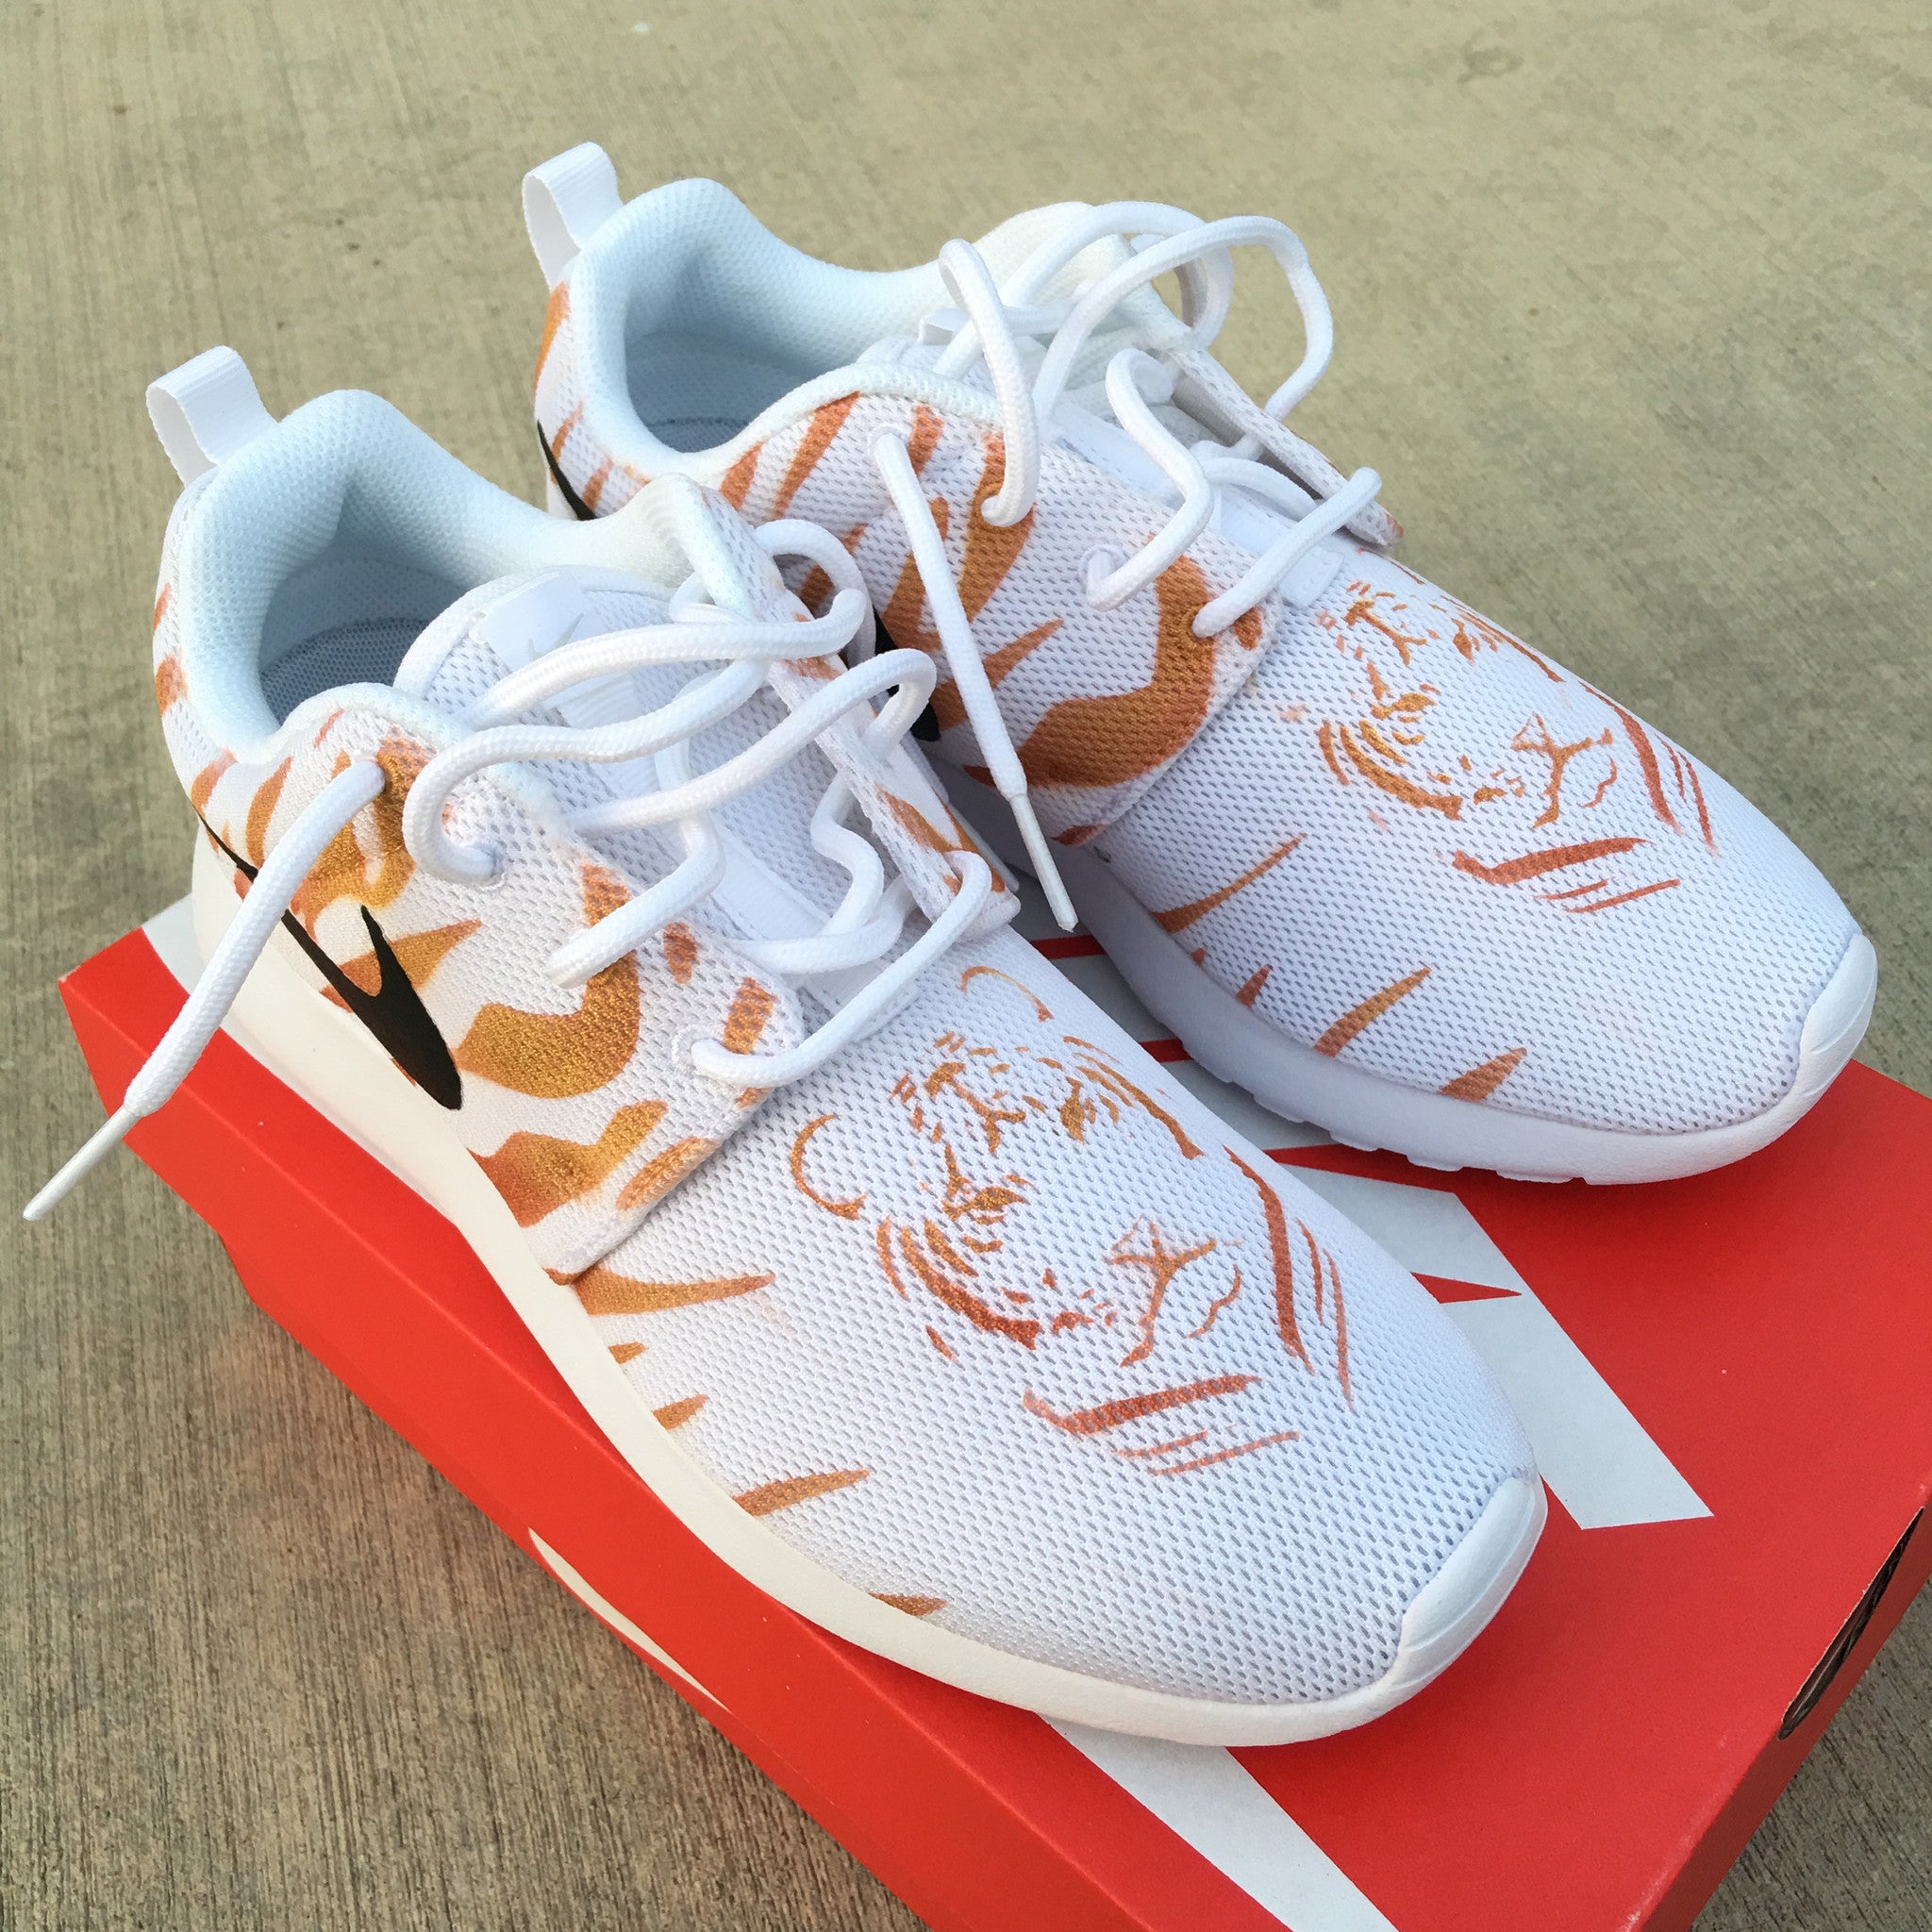 custom painted tennis shoes